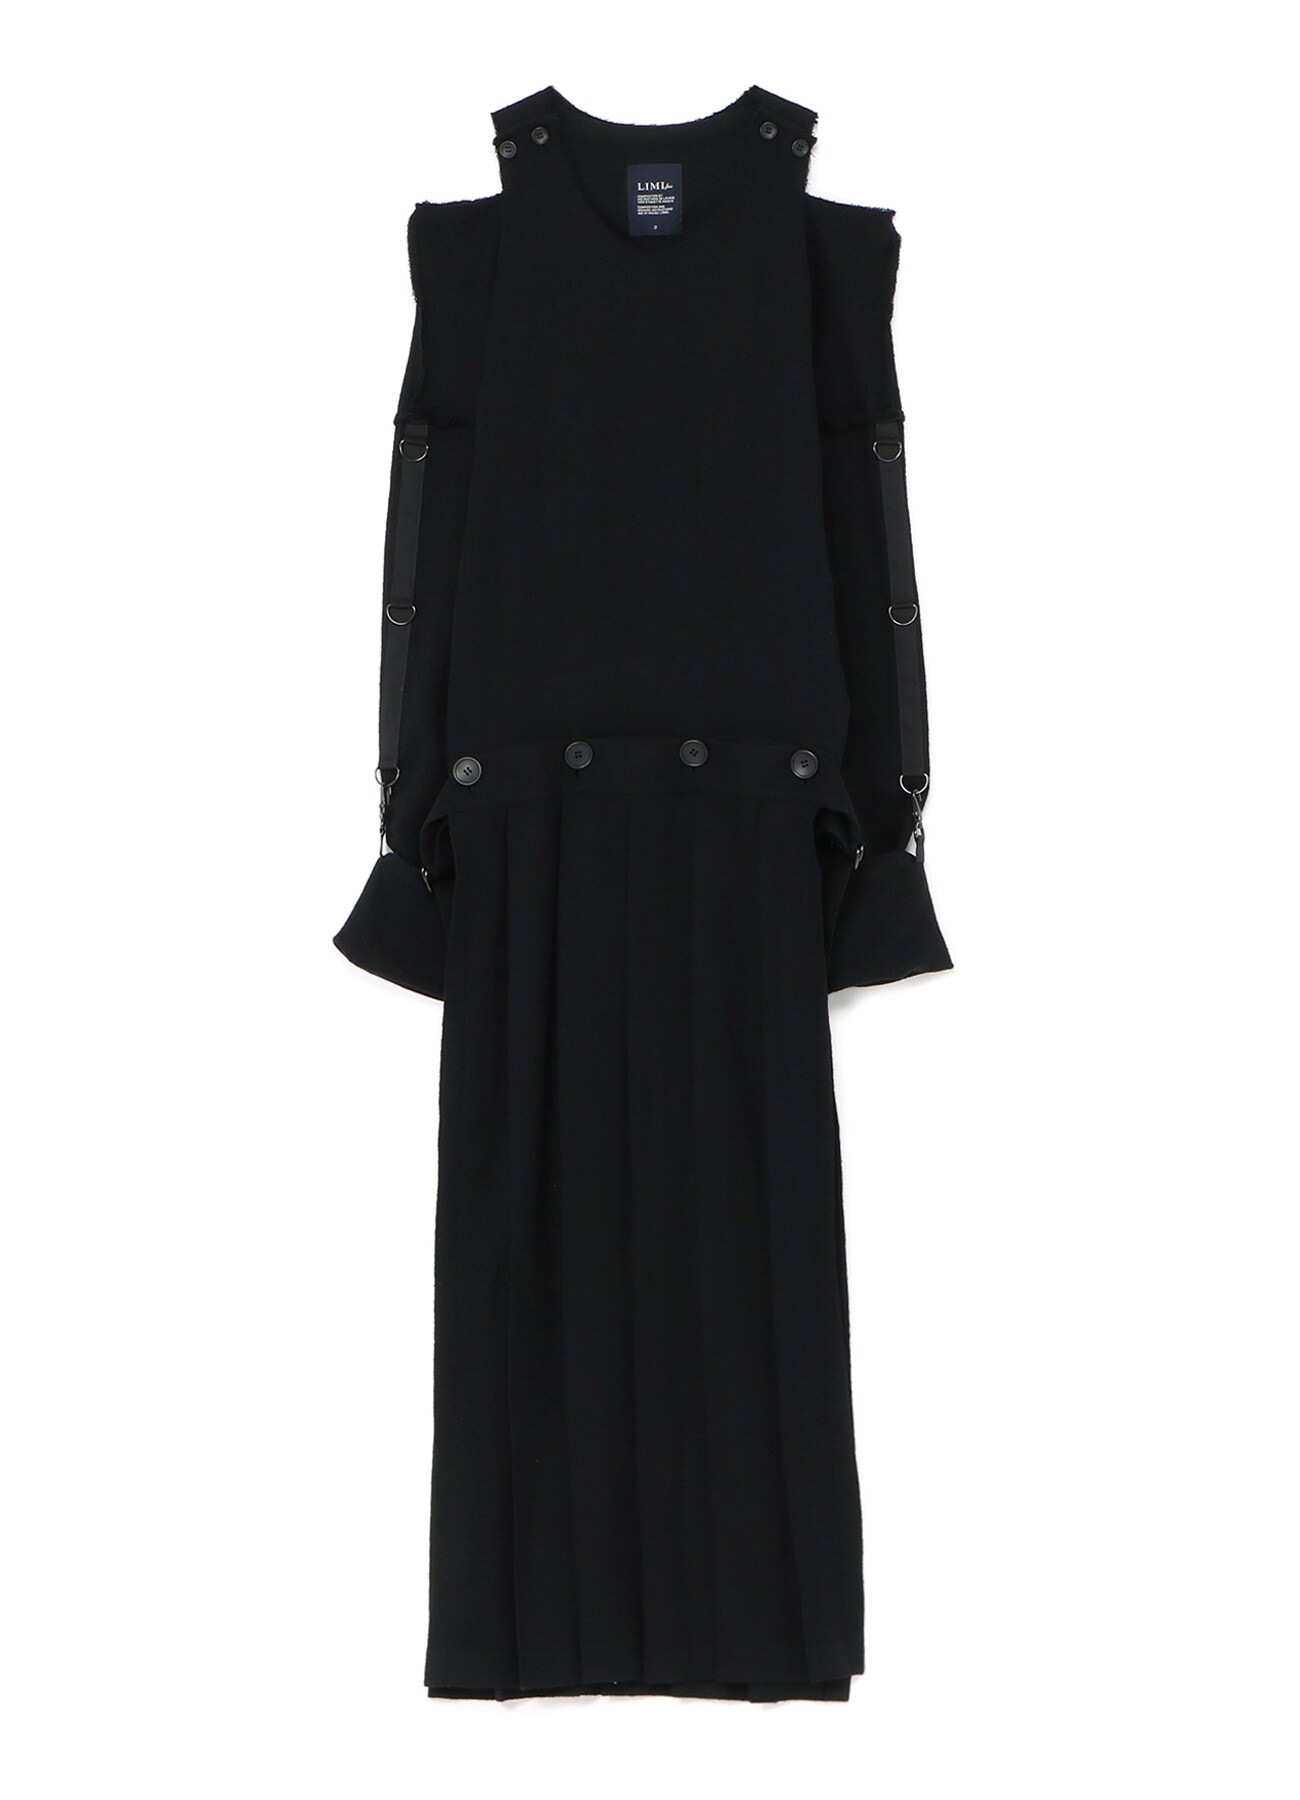 W/Gause Dress With Pleats(S Black): Vintage 1.1｜THE SHOP YOHJI